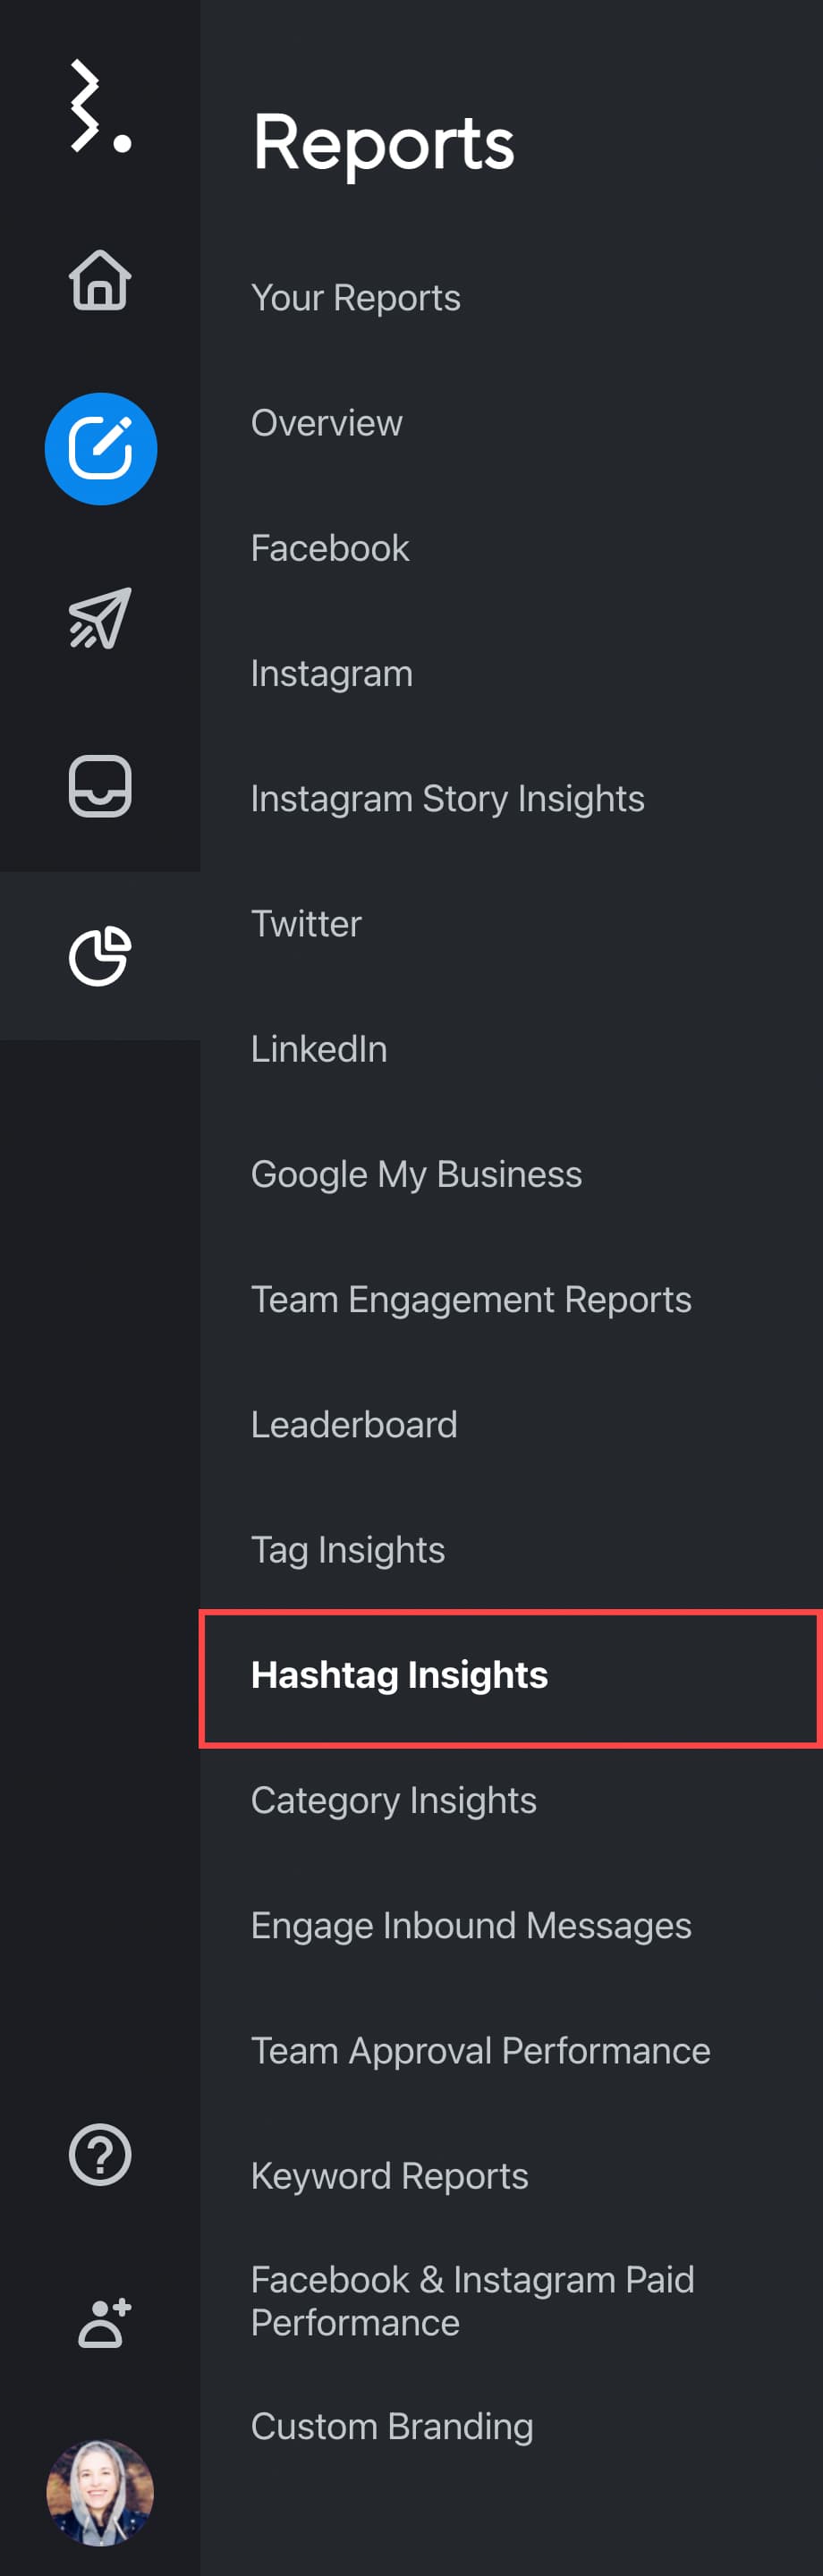 hashtag_insights.jpg